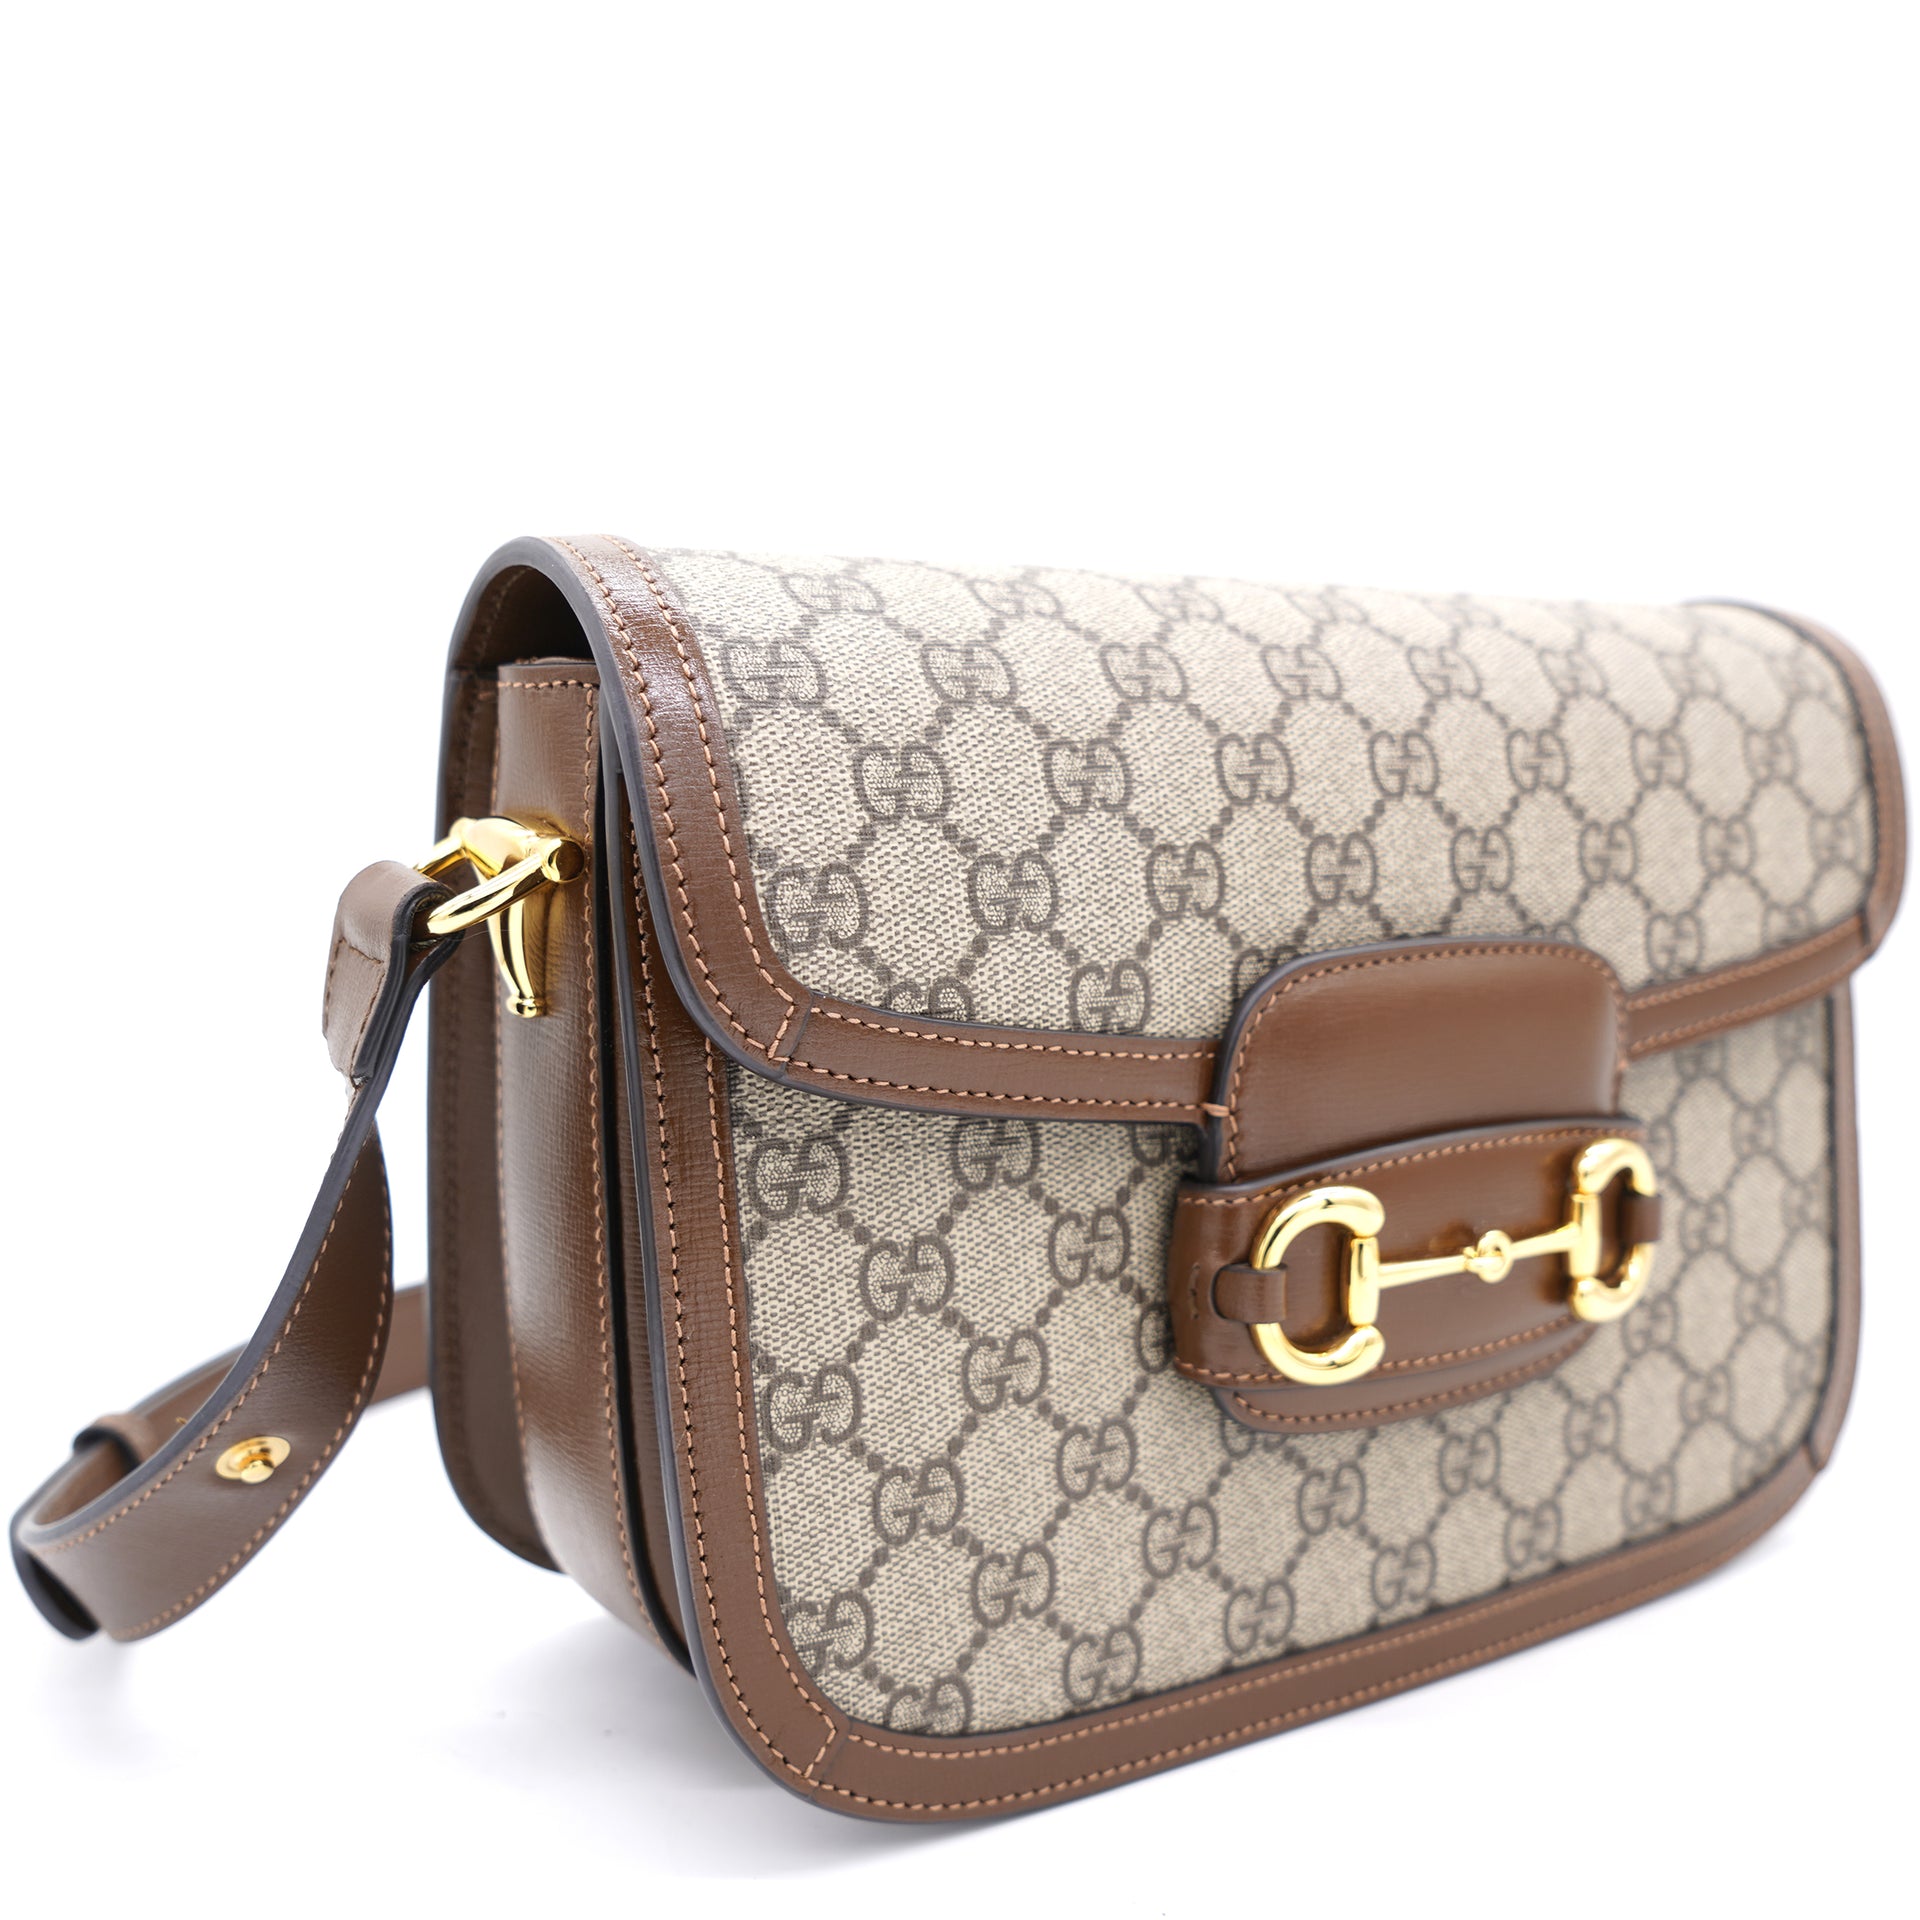 Gucci Horsebit 1955 GG Shoulder Bag in Brown - Gucci